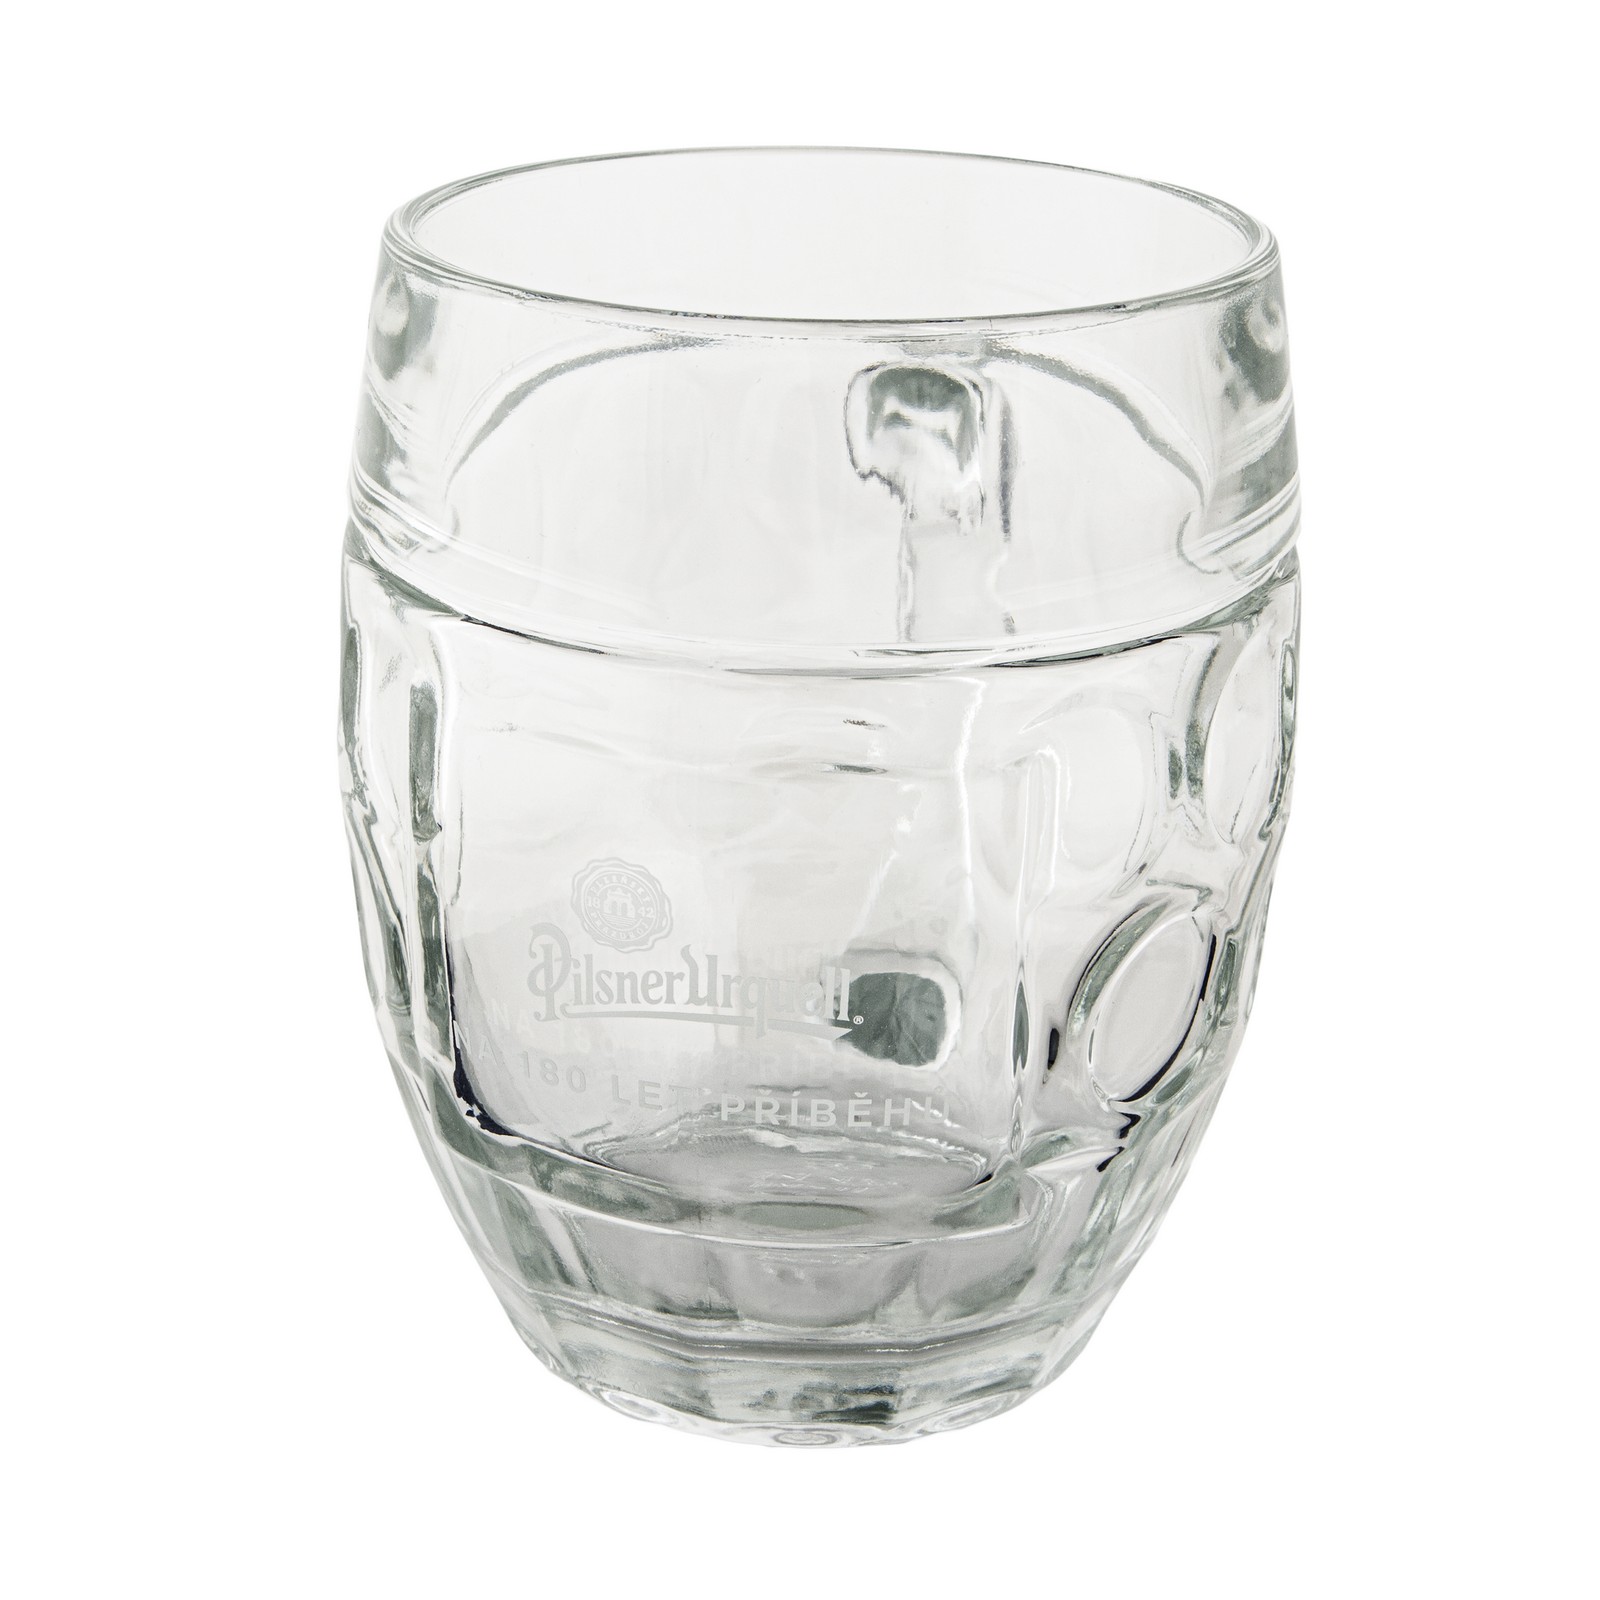 Half-litre Pilsner Urquell Glass, 180 year edition